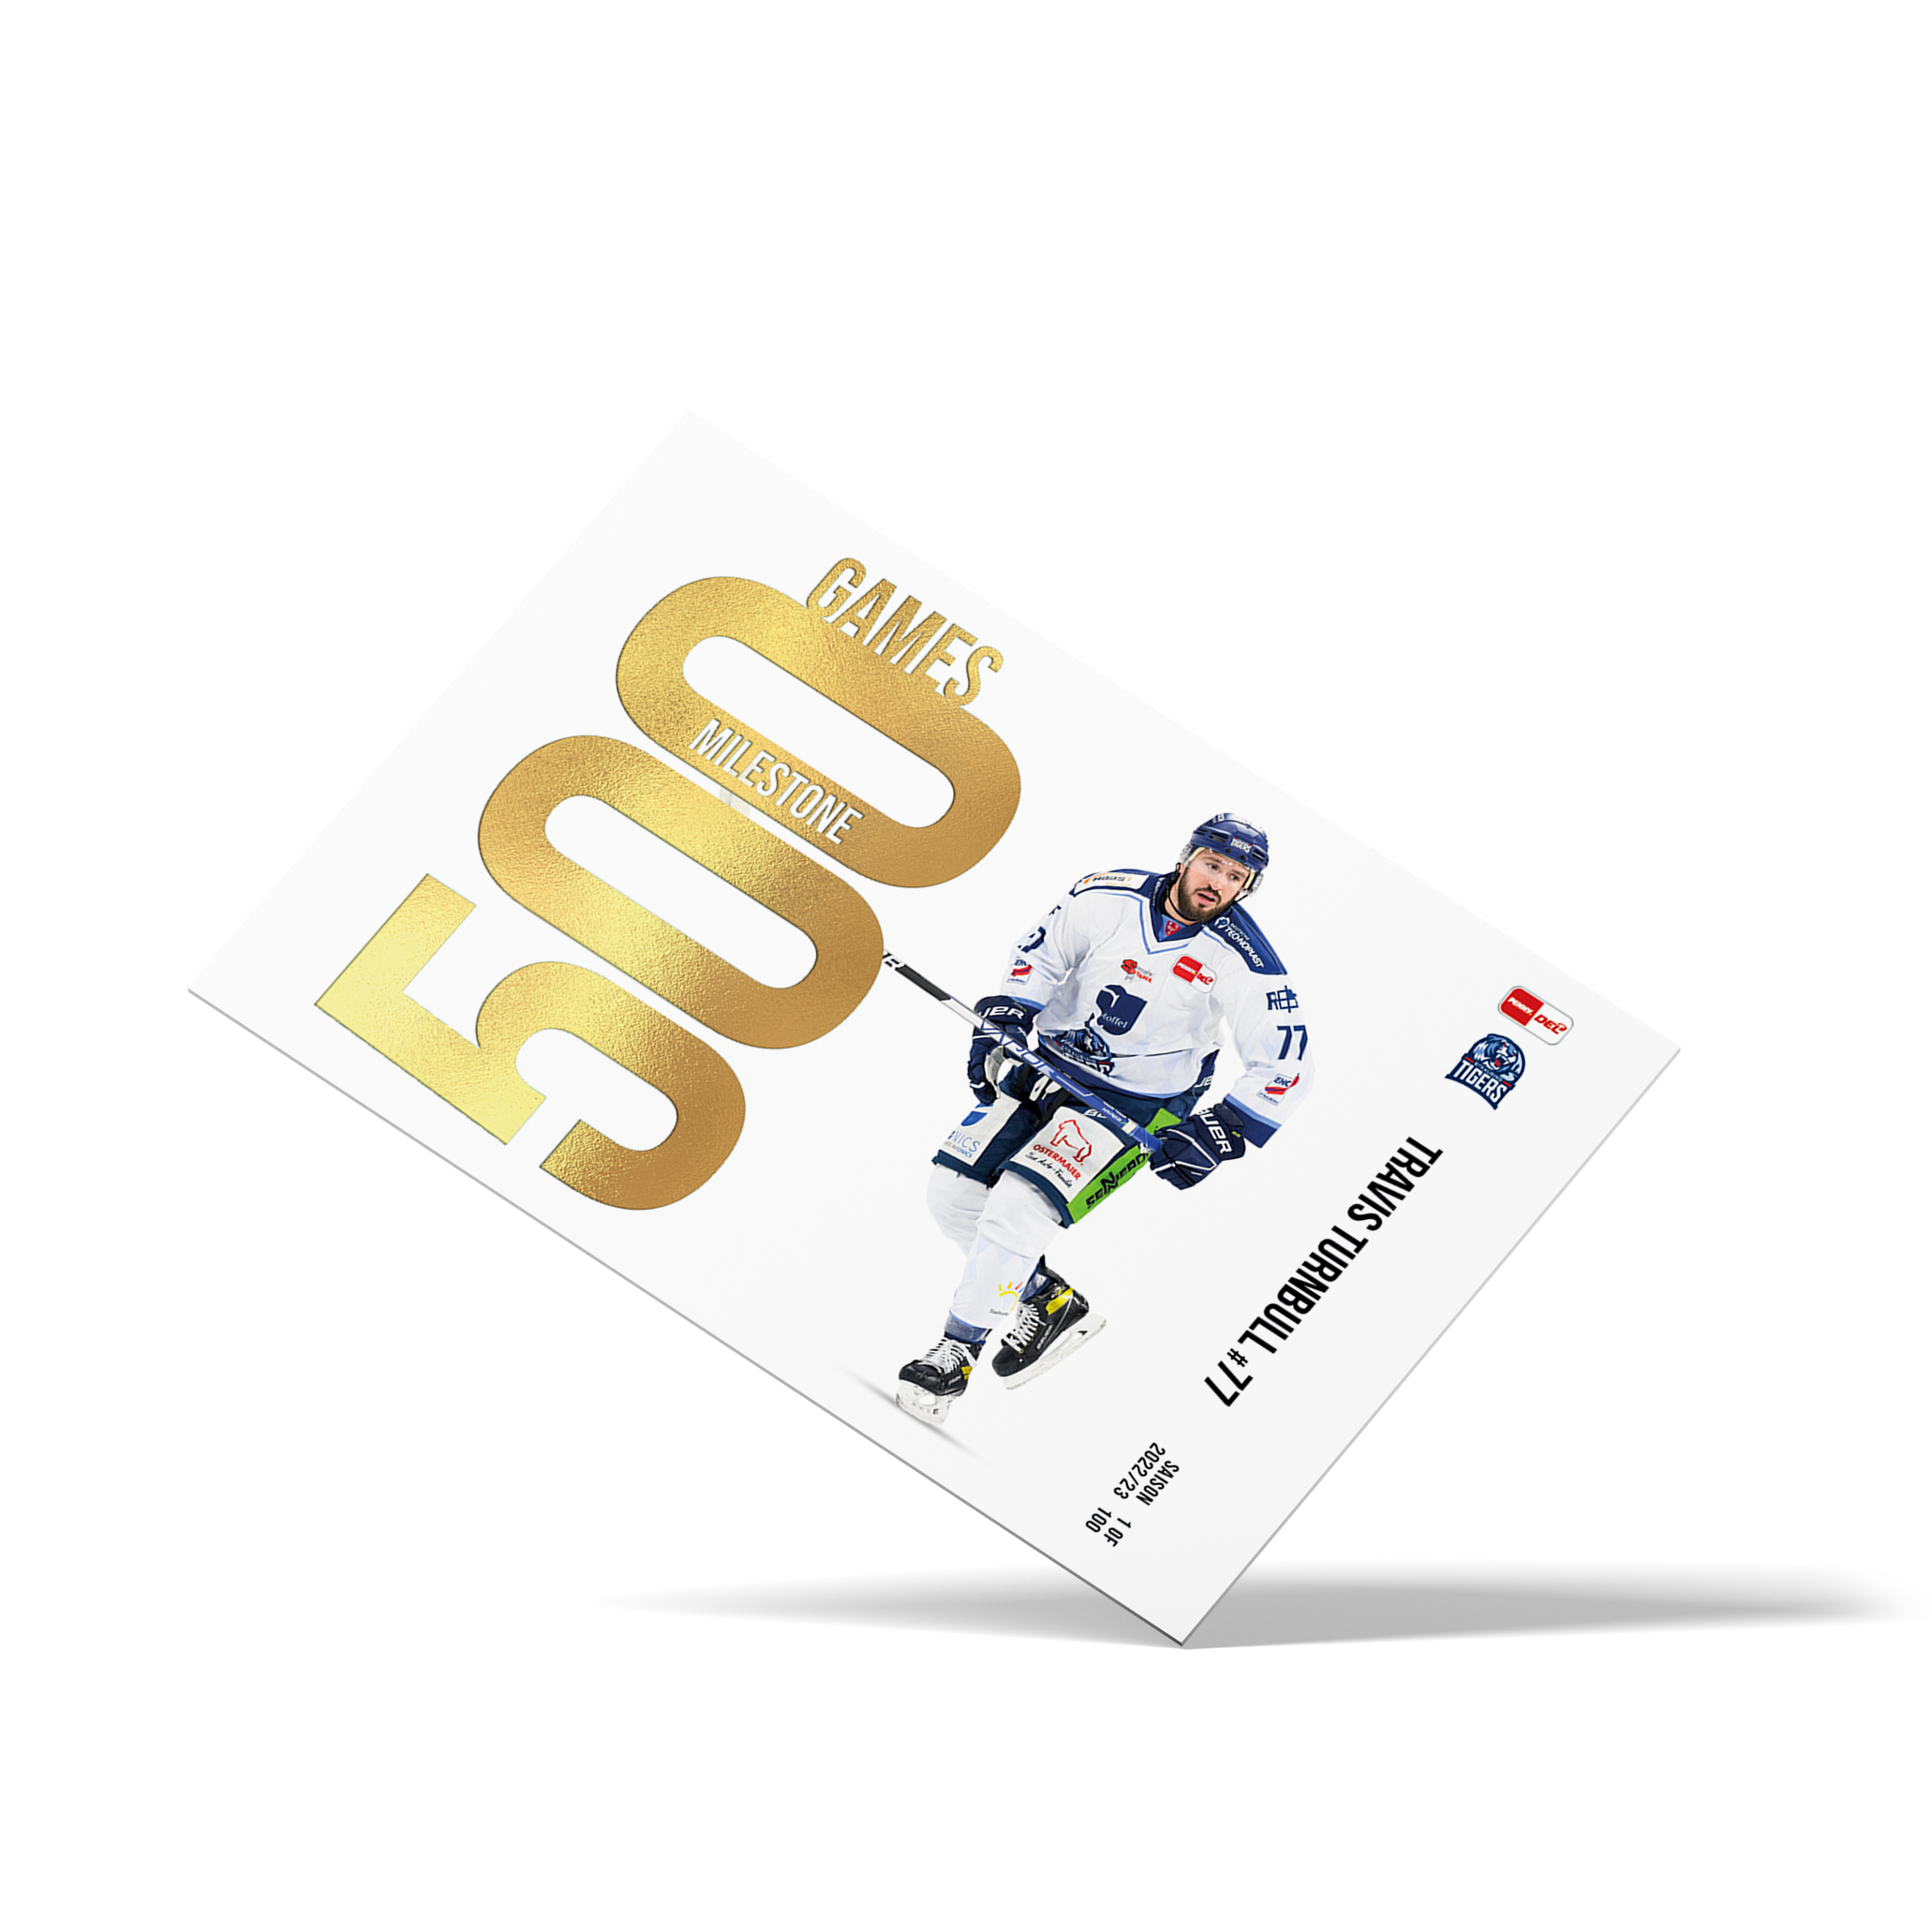 MILESTONE - 500 Games - Travis Turnbull